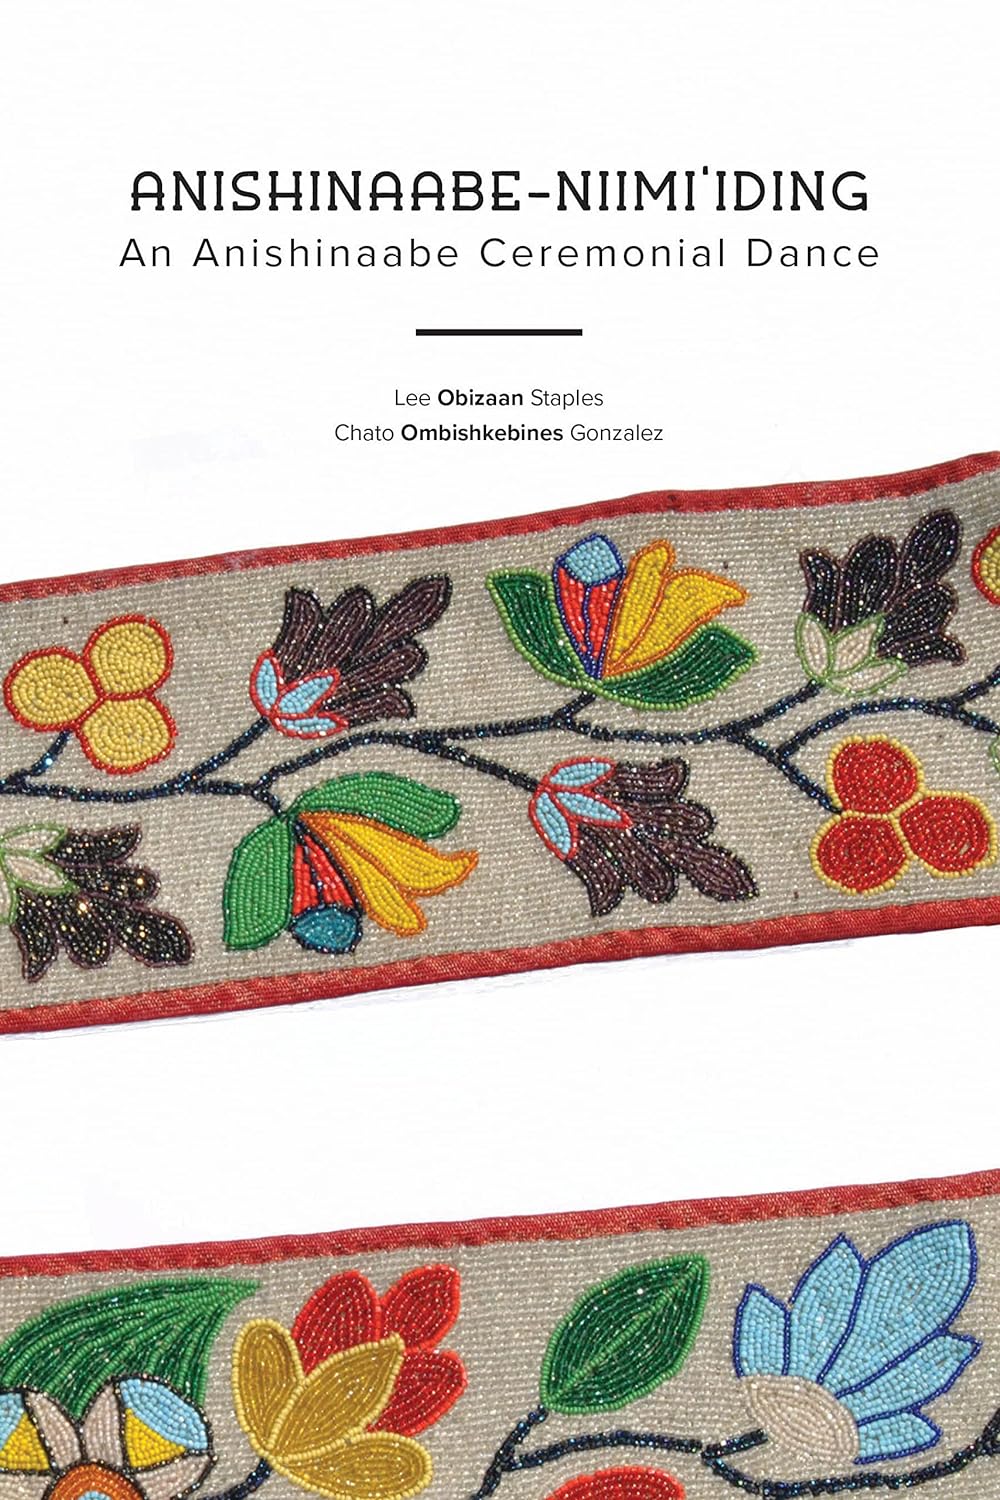 Anishinaabe-Niimi'iding: An Anishinaabe Ceremonial Dance by Lee Obizaan Staples & Chato Ombishkebines Gonzalez